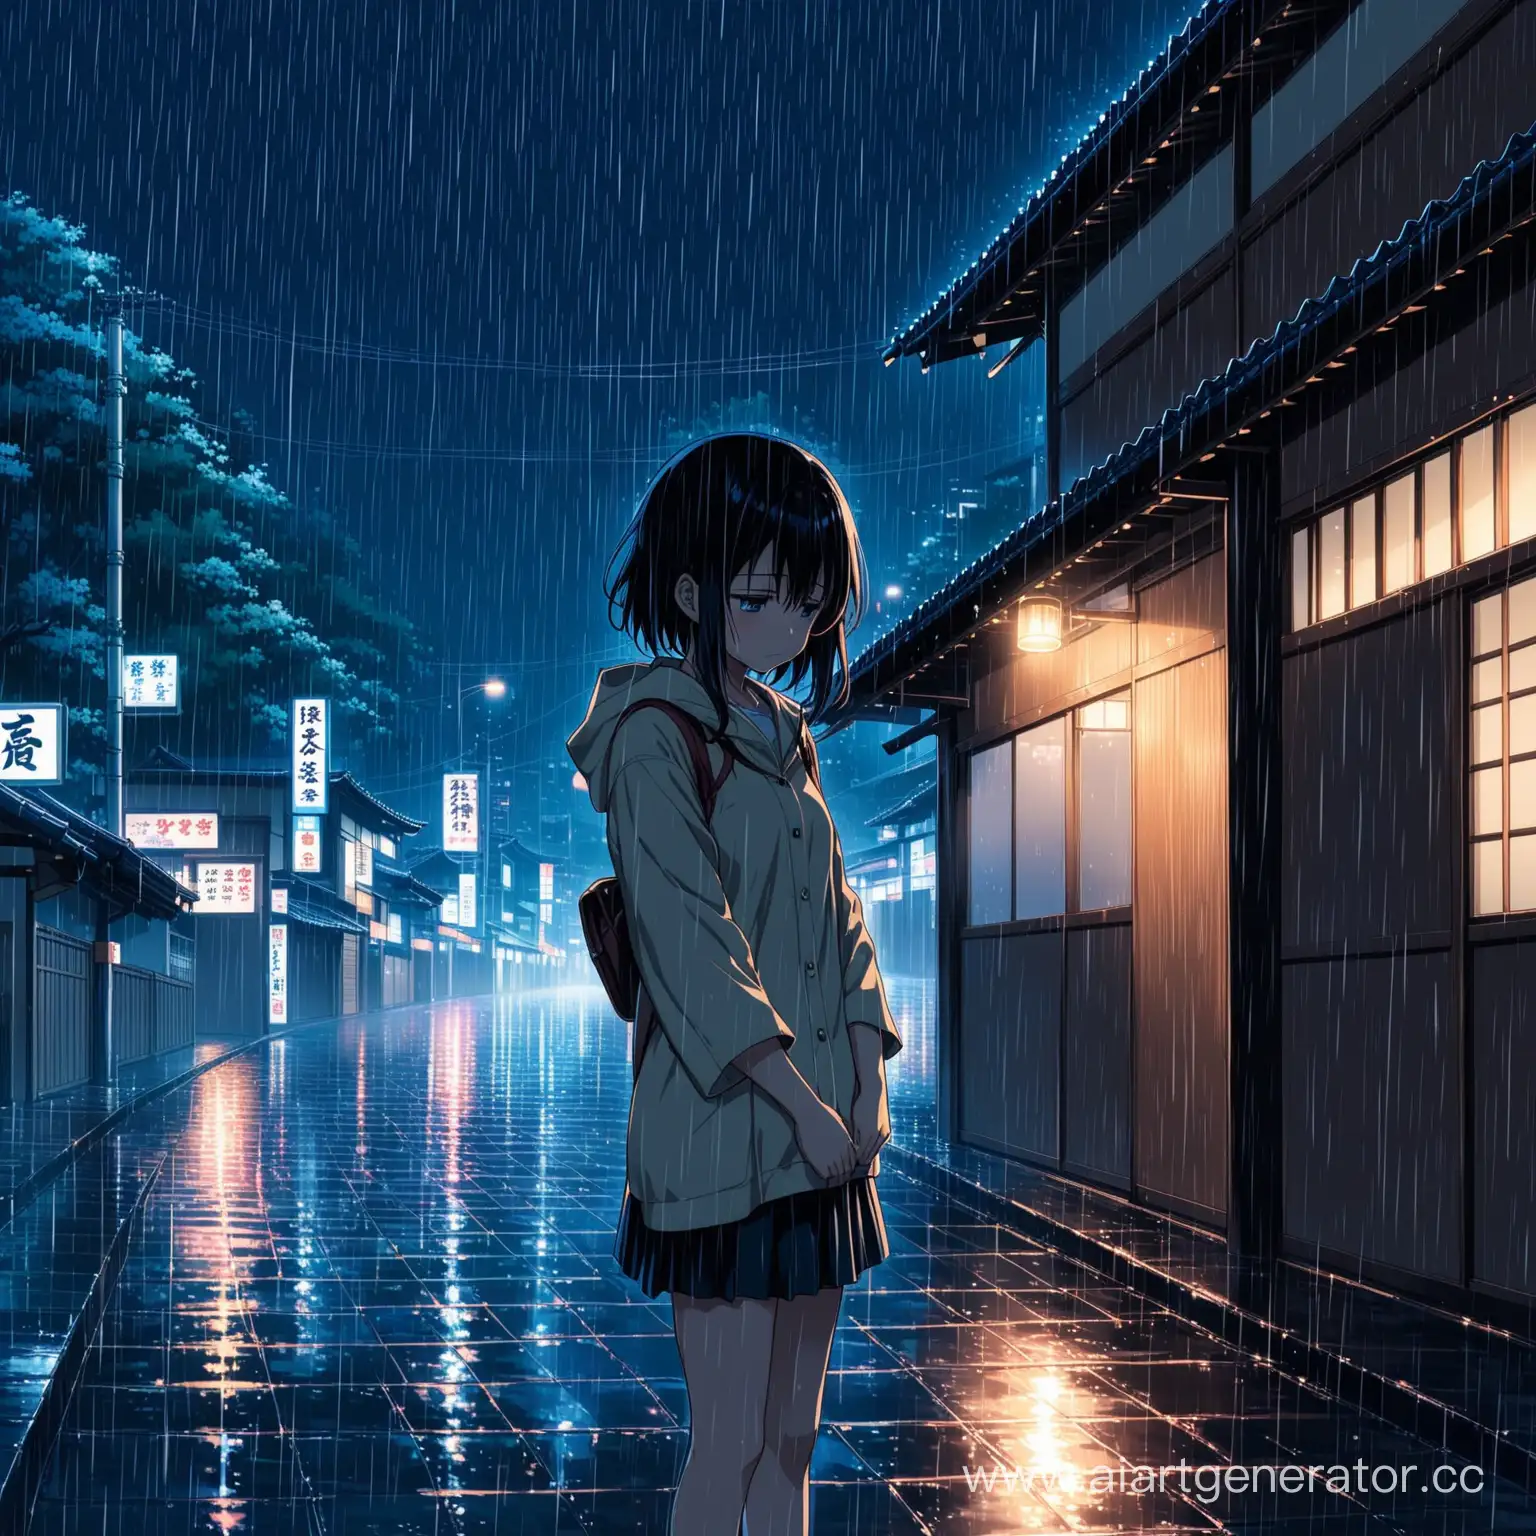 sad anime rain japan night

